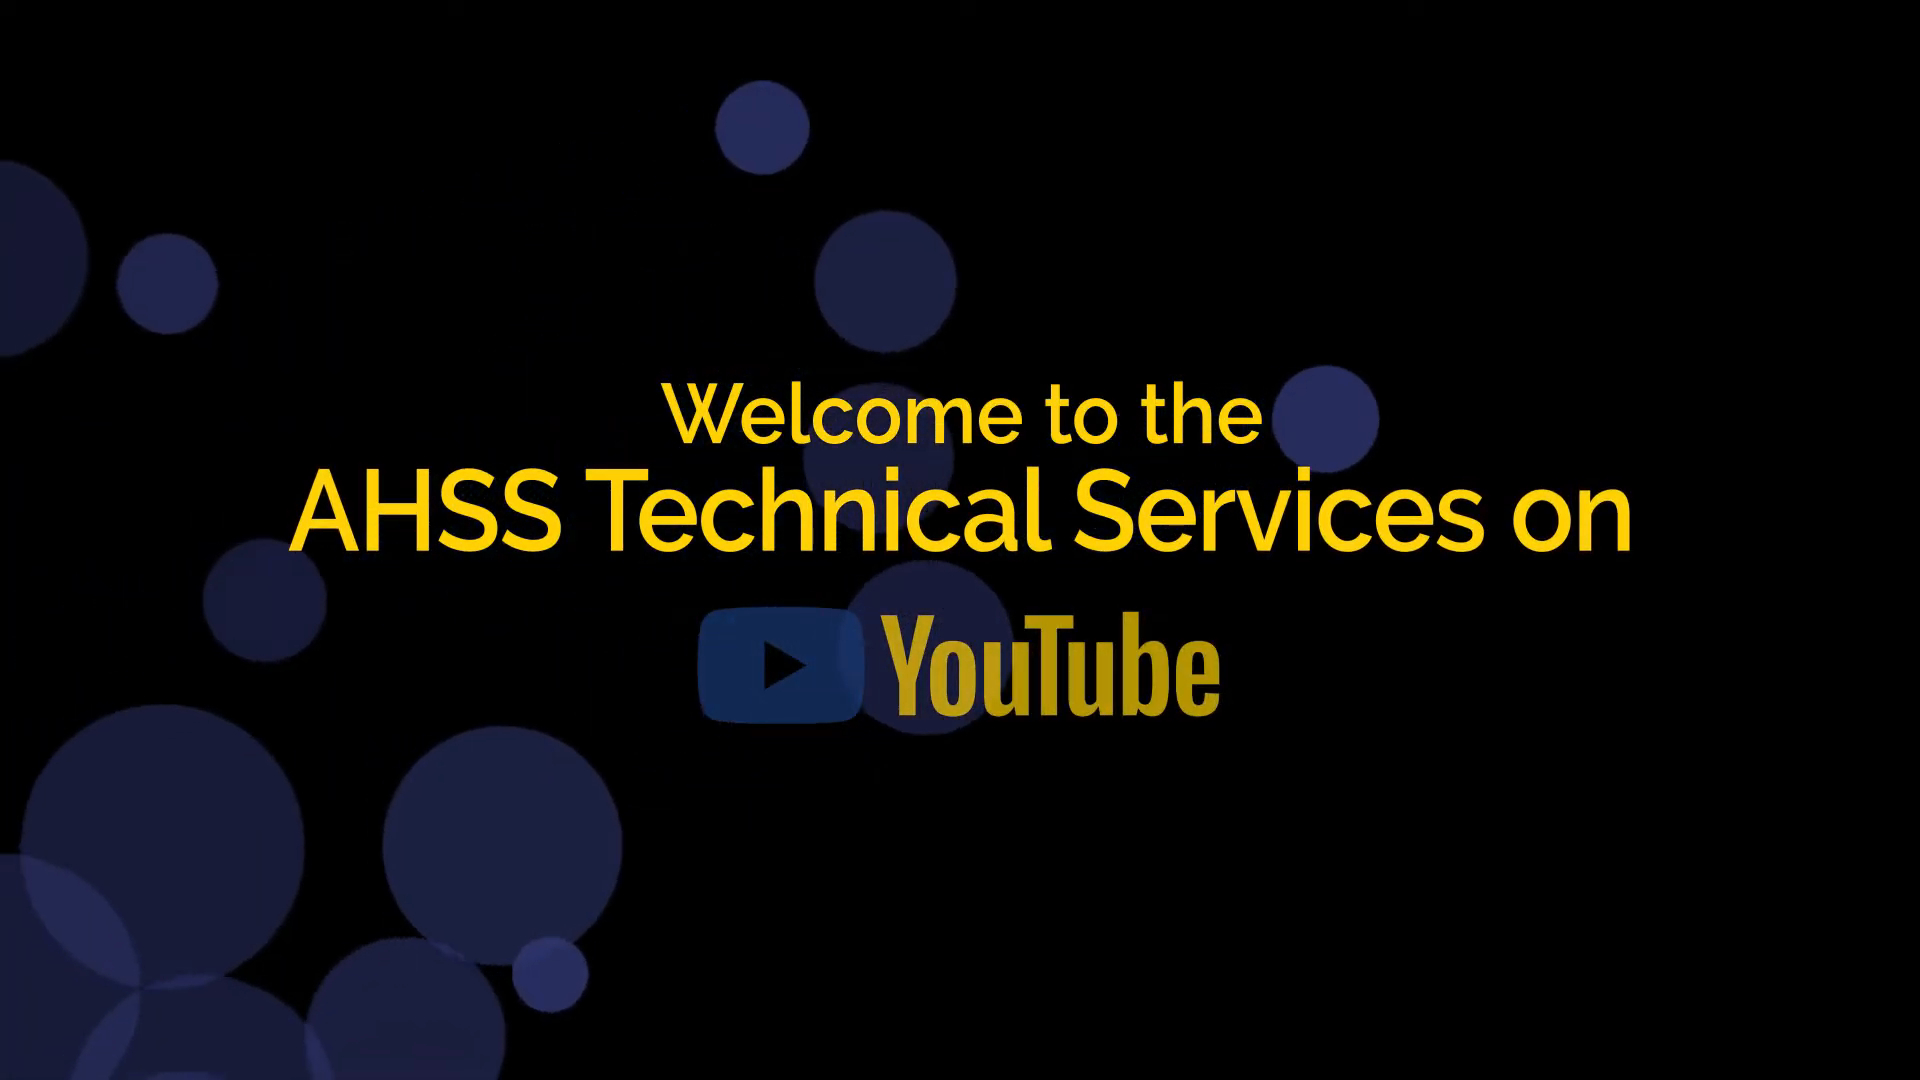 AHSS Technical Services trailer welcome screen